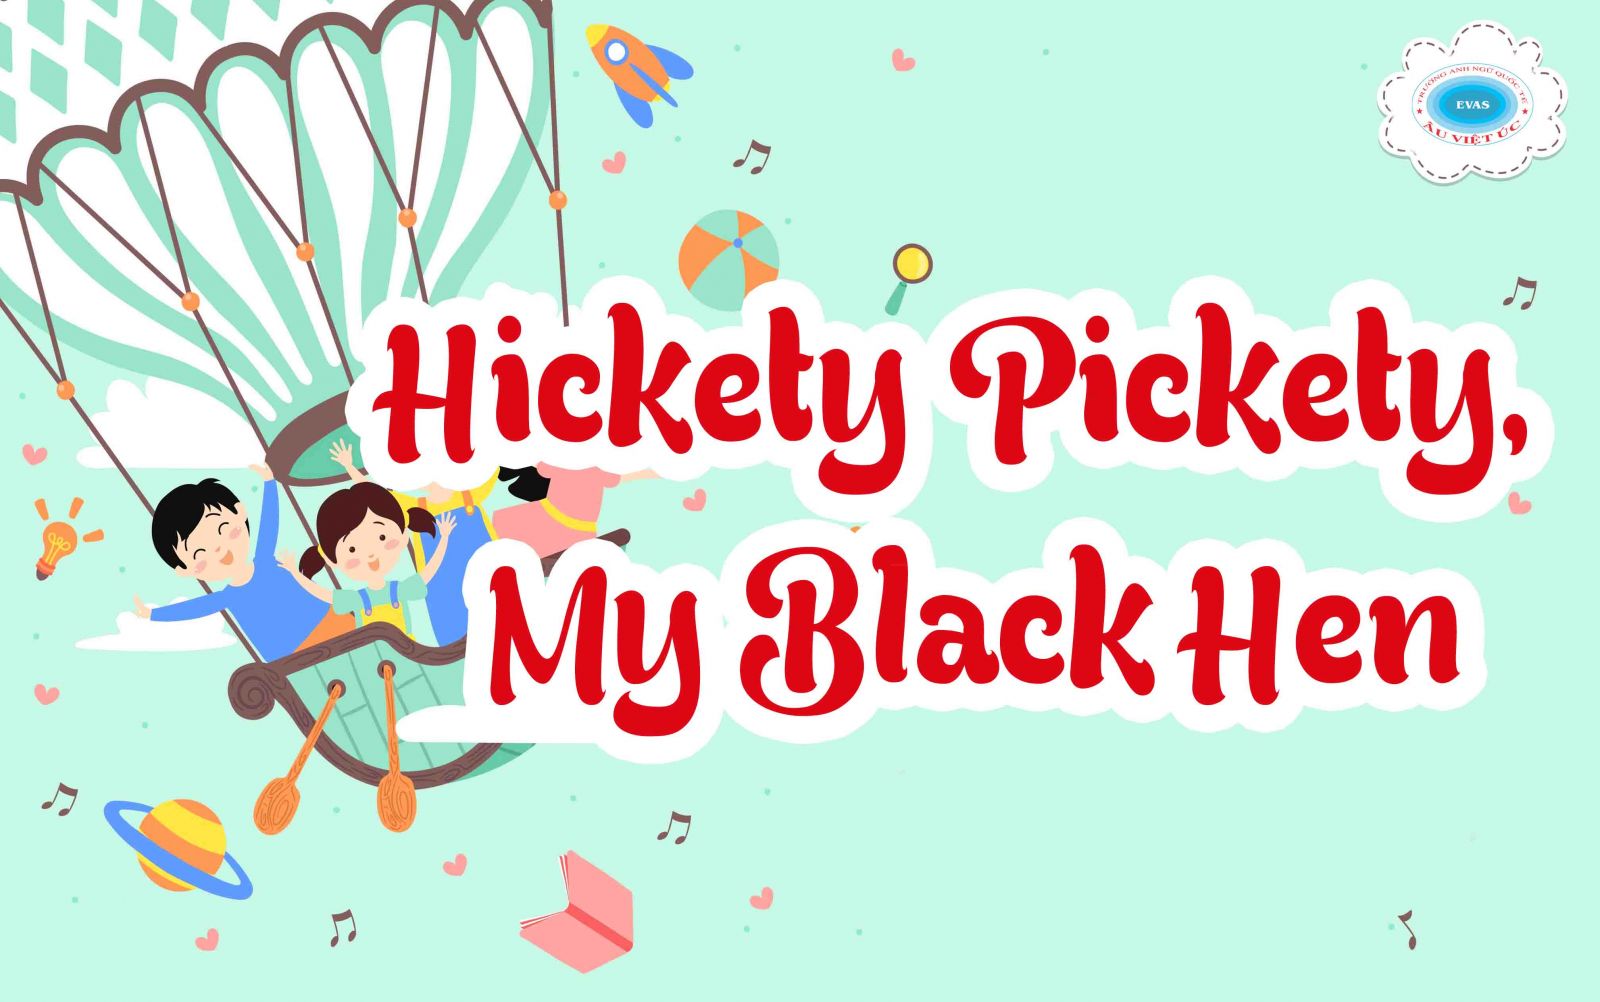 Hickety Pickety, My Black Hen